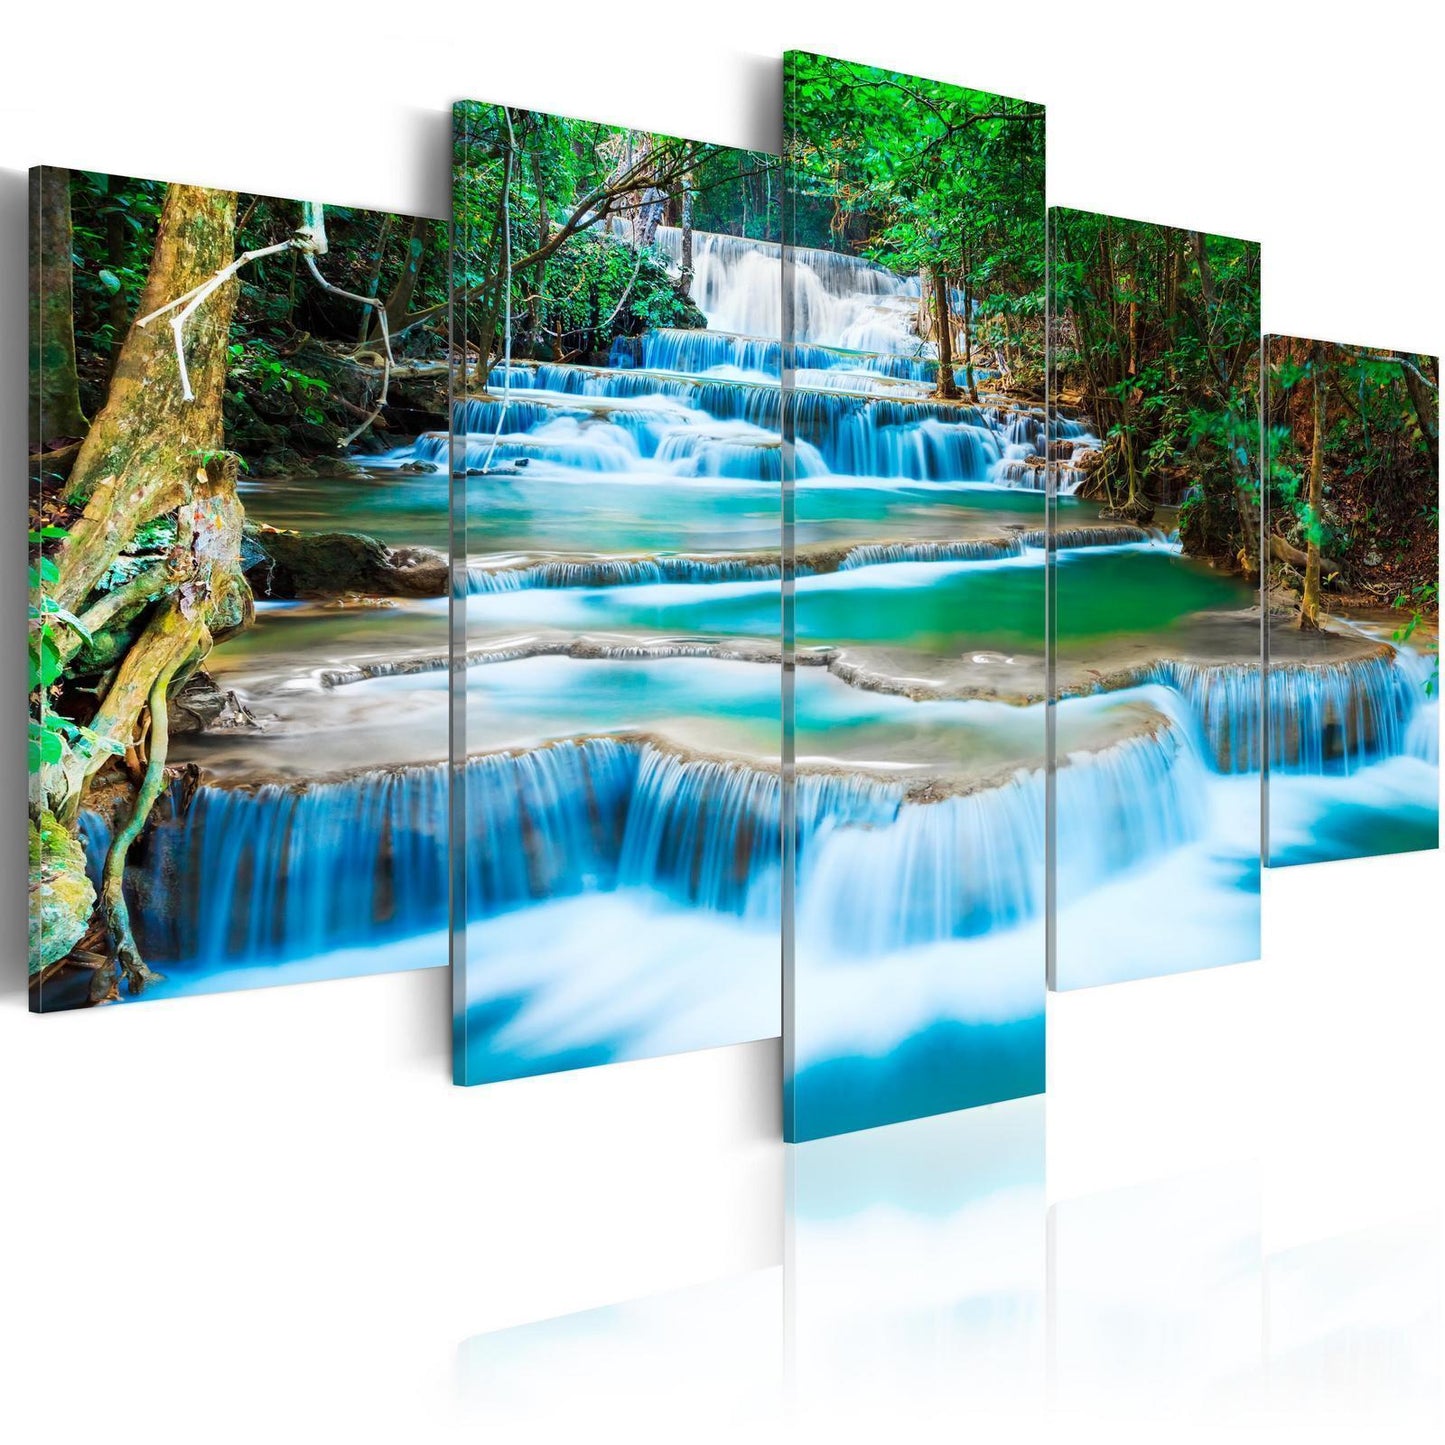 Painting - Blue Waterfall in Kanchanaburi, Thailand